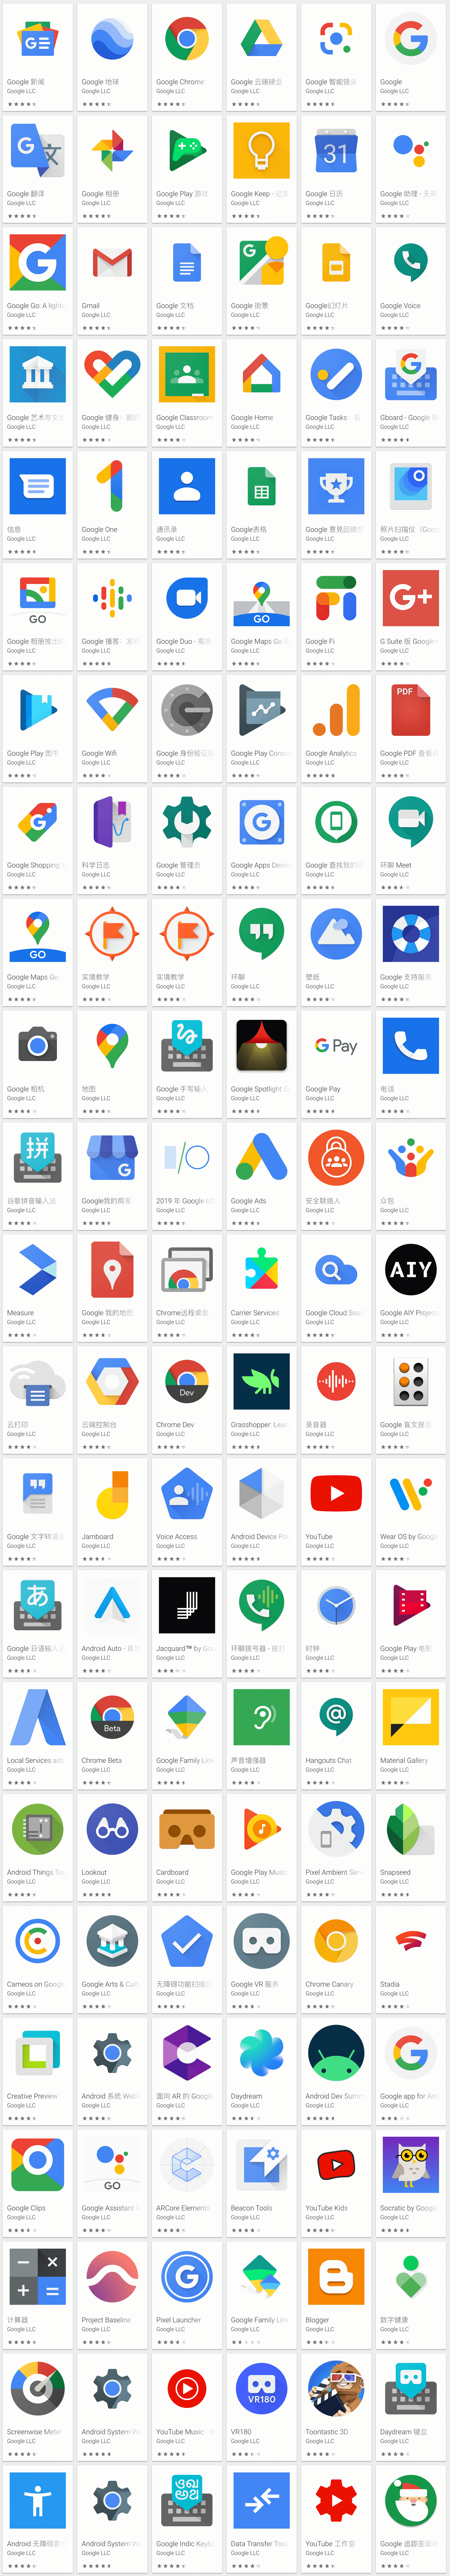 Google-app.png